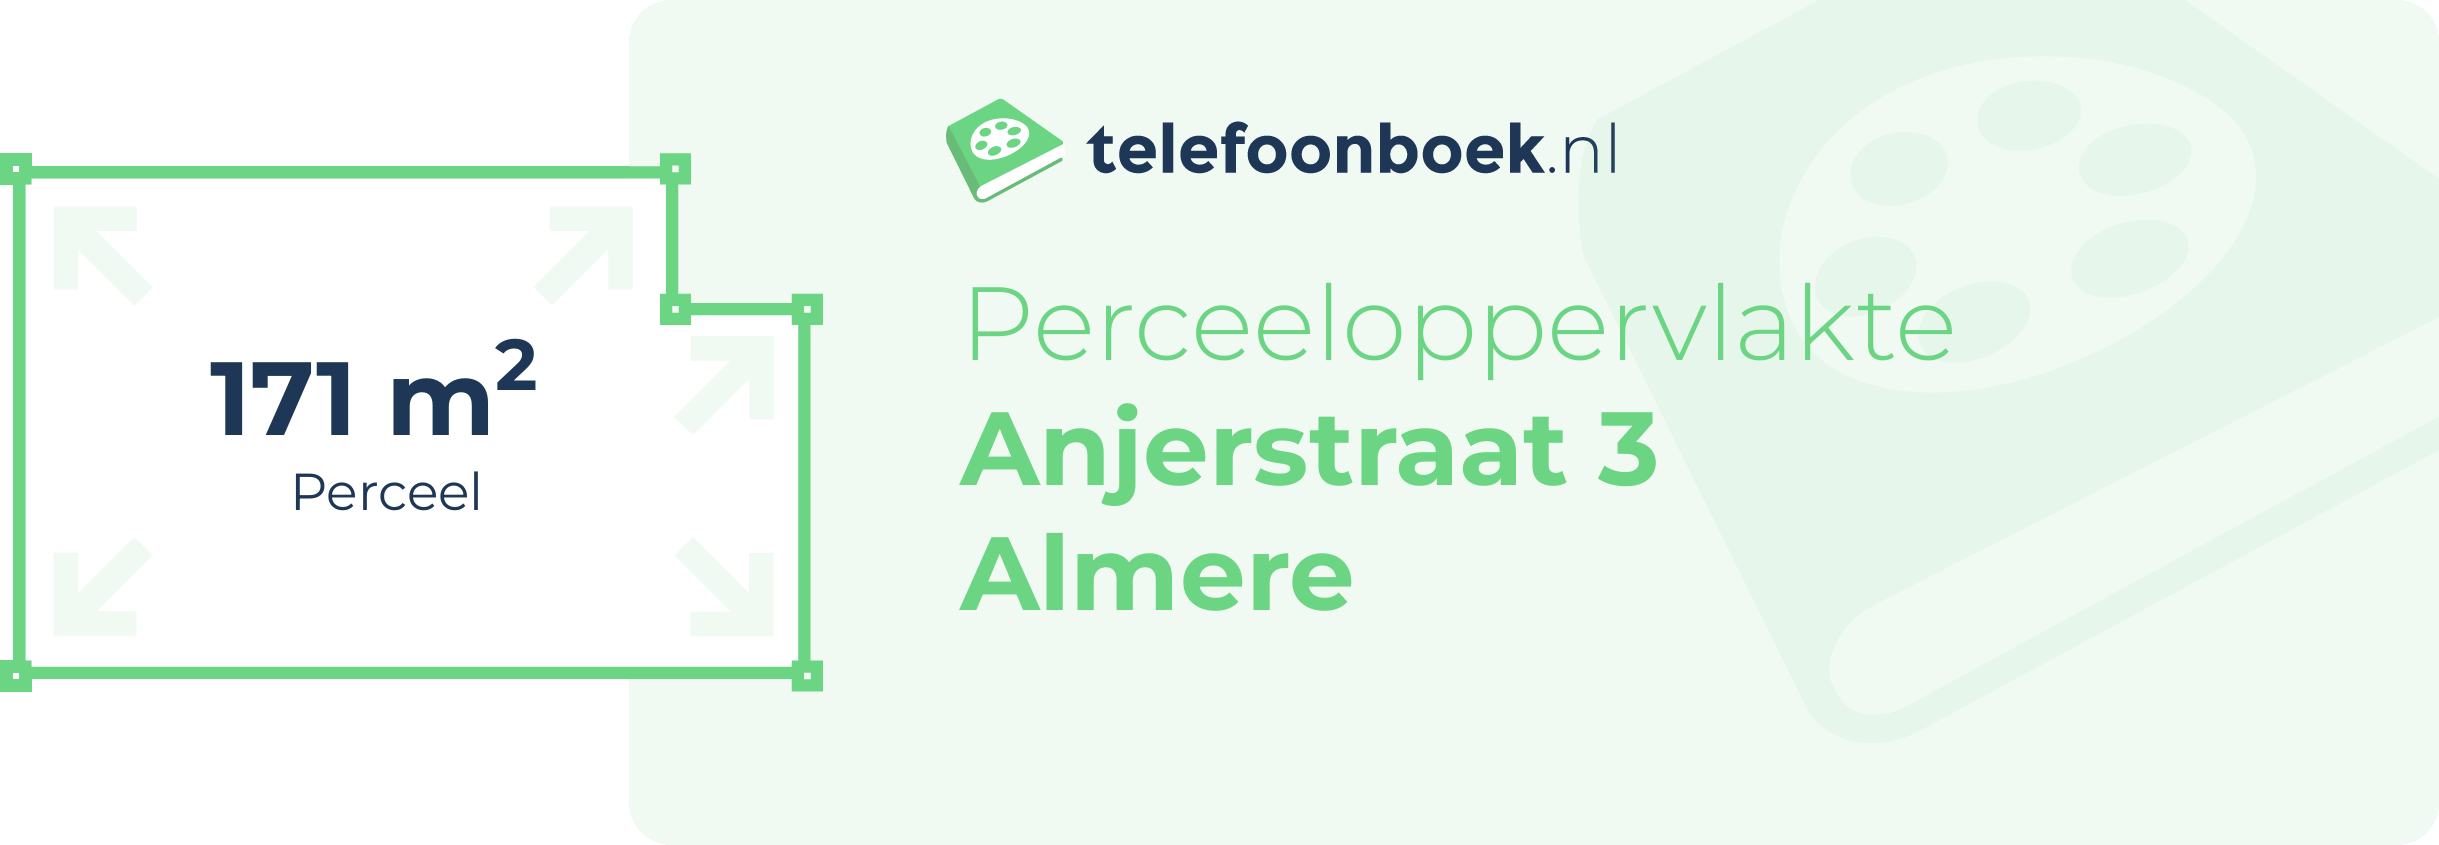 Perceeloppervlakte Anjerstraat 3 Almere